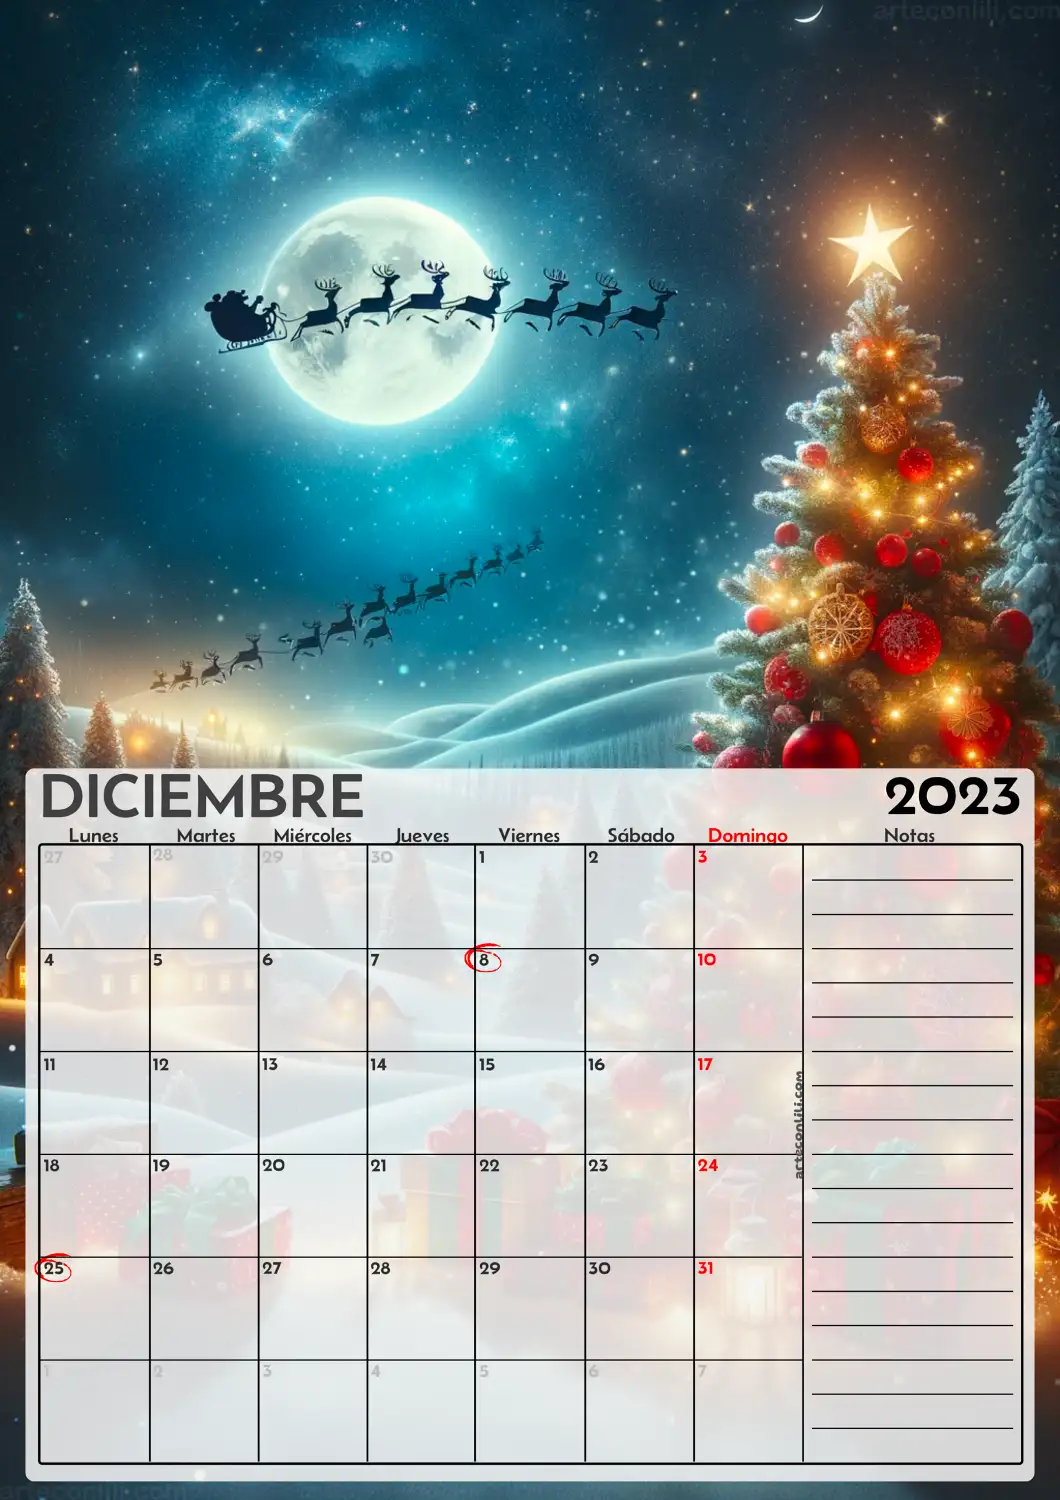 calendario diciembre 2023 motivos navidad arteconlili.com6